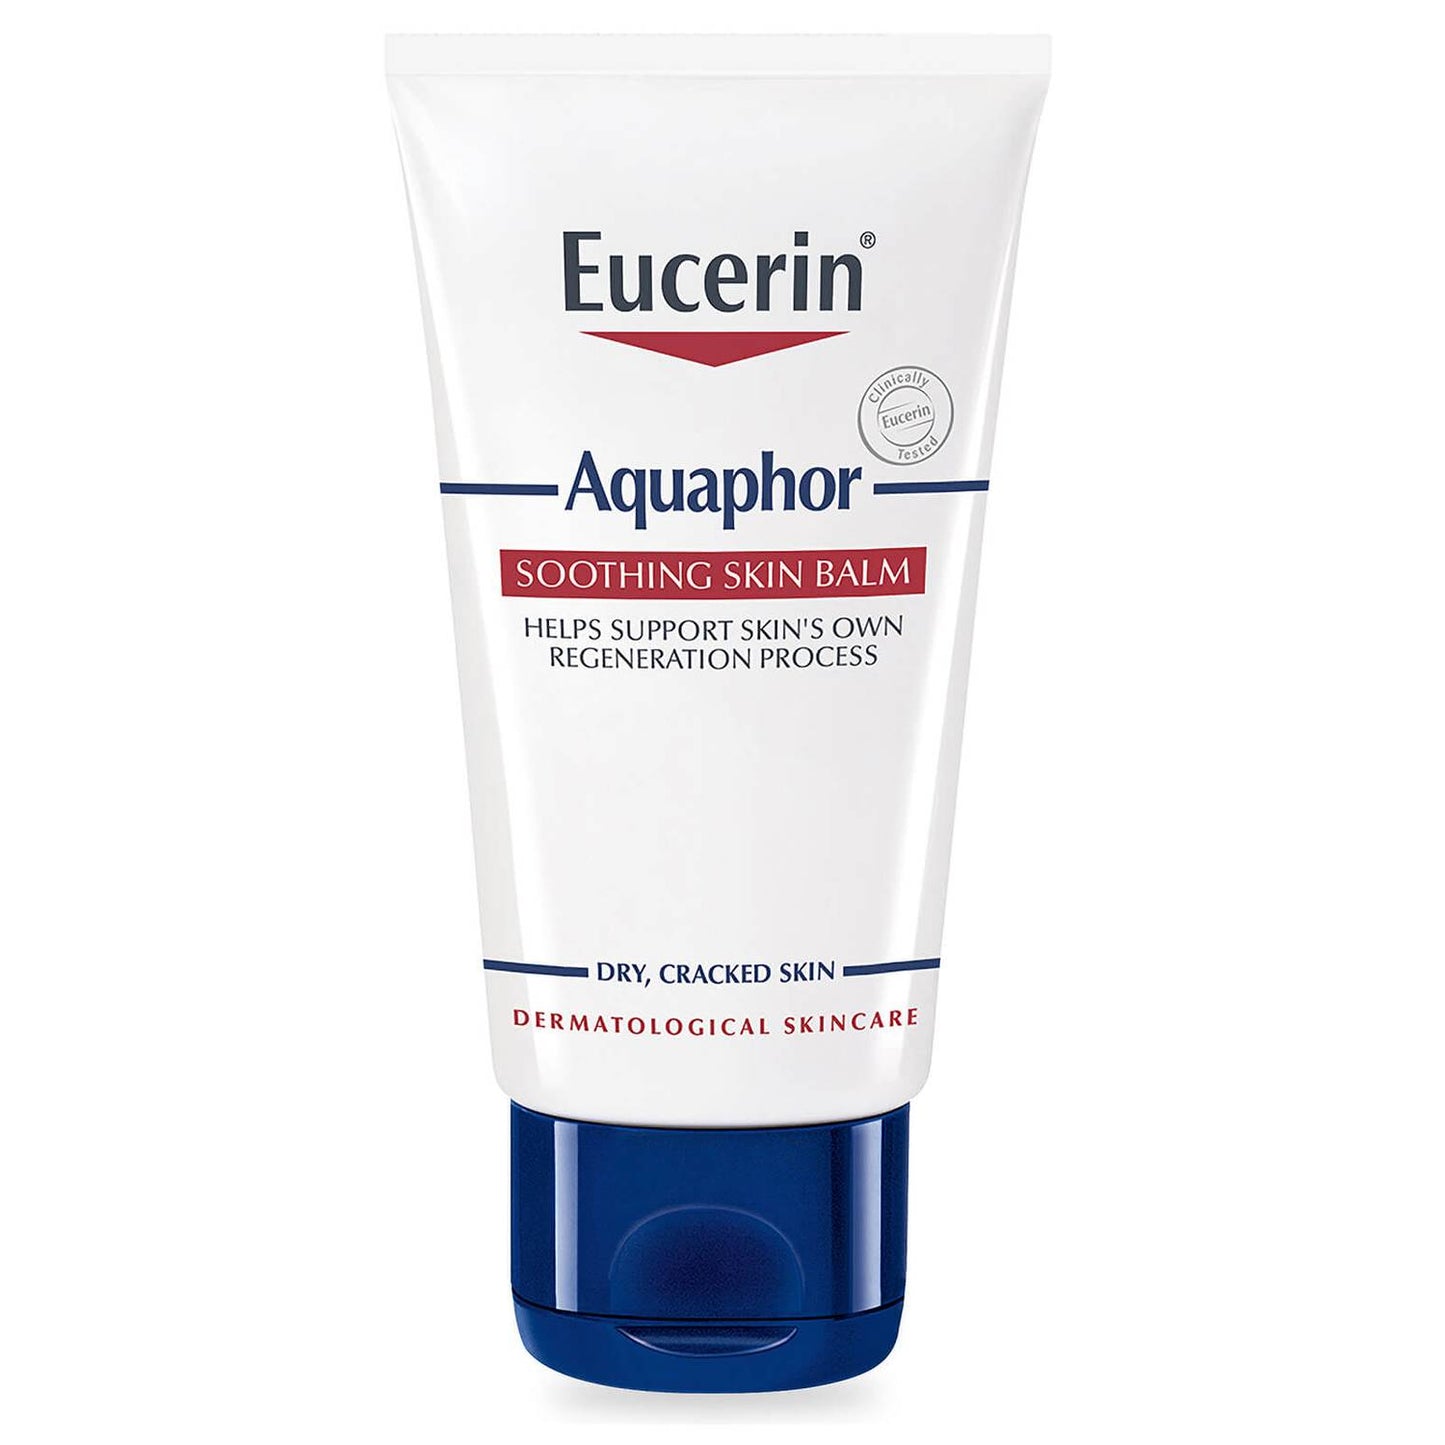 Eucerin Aquaphor 45G Soothing Balm